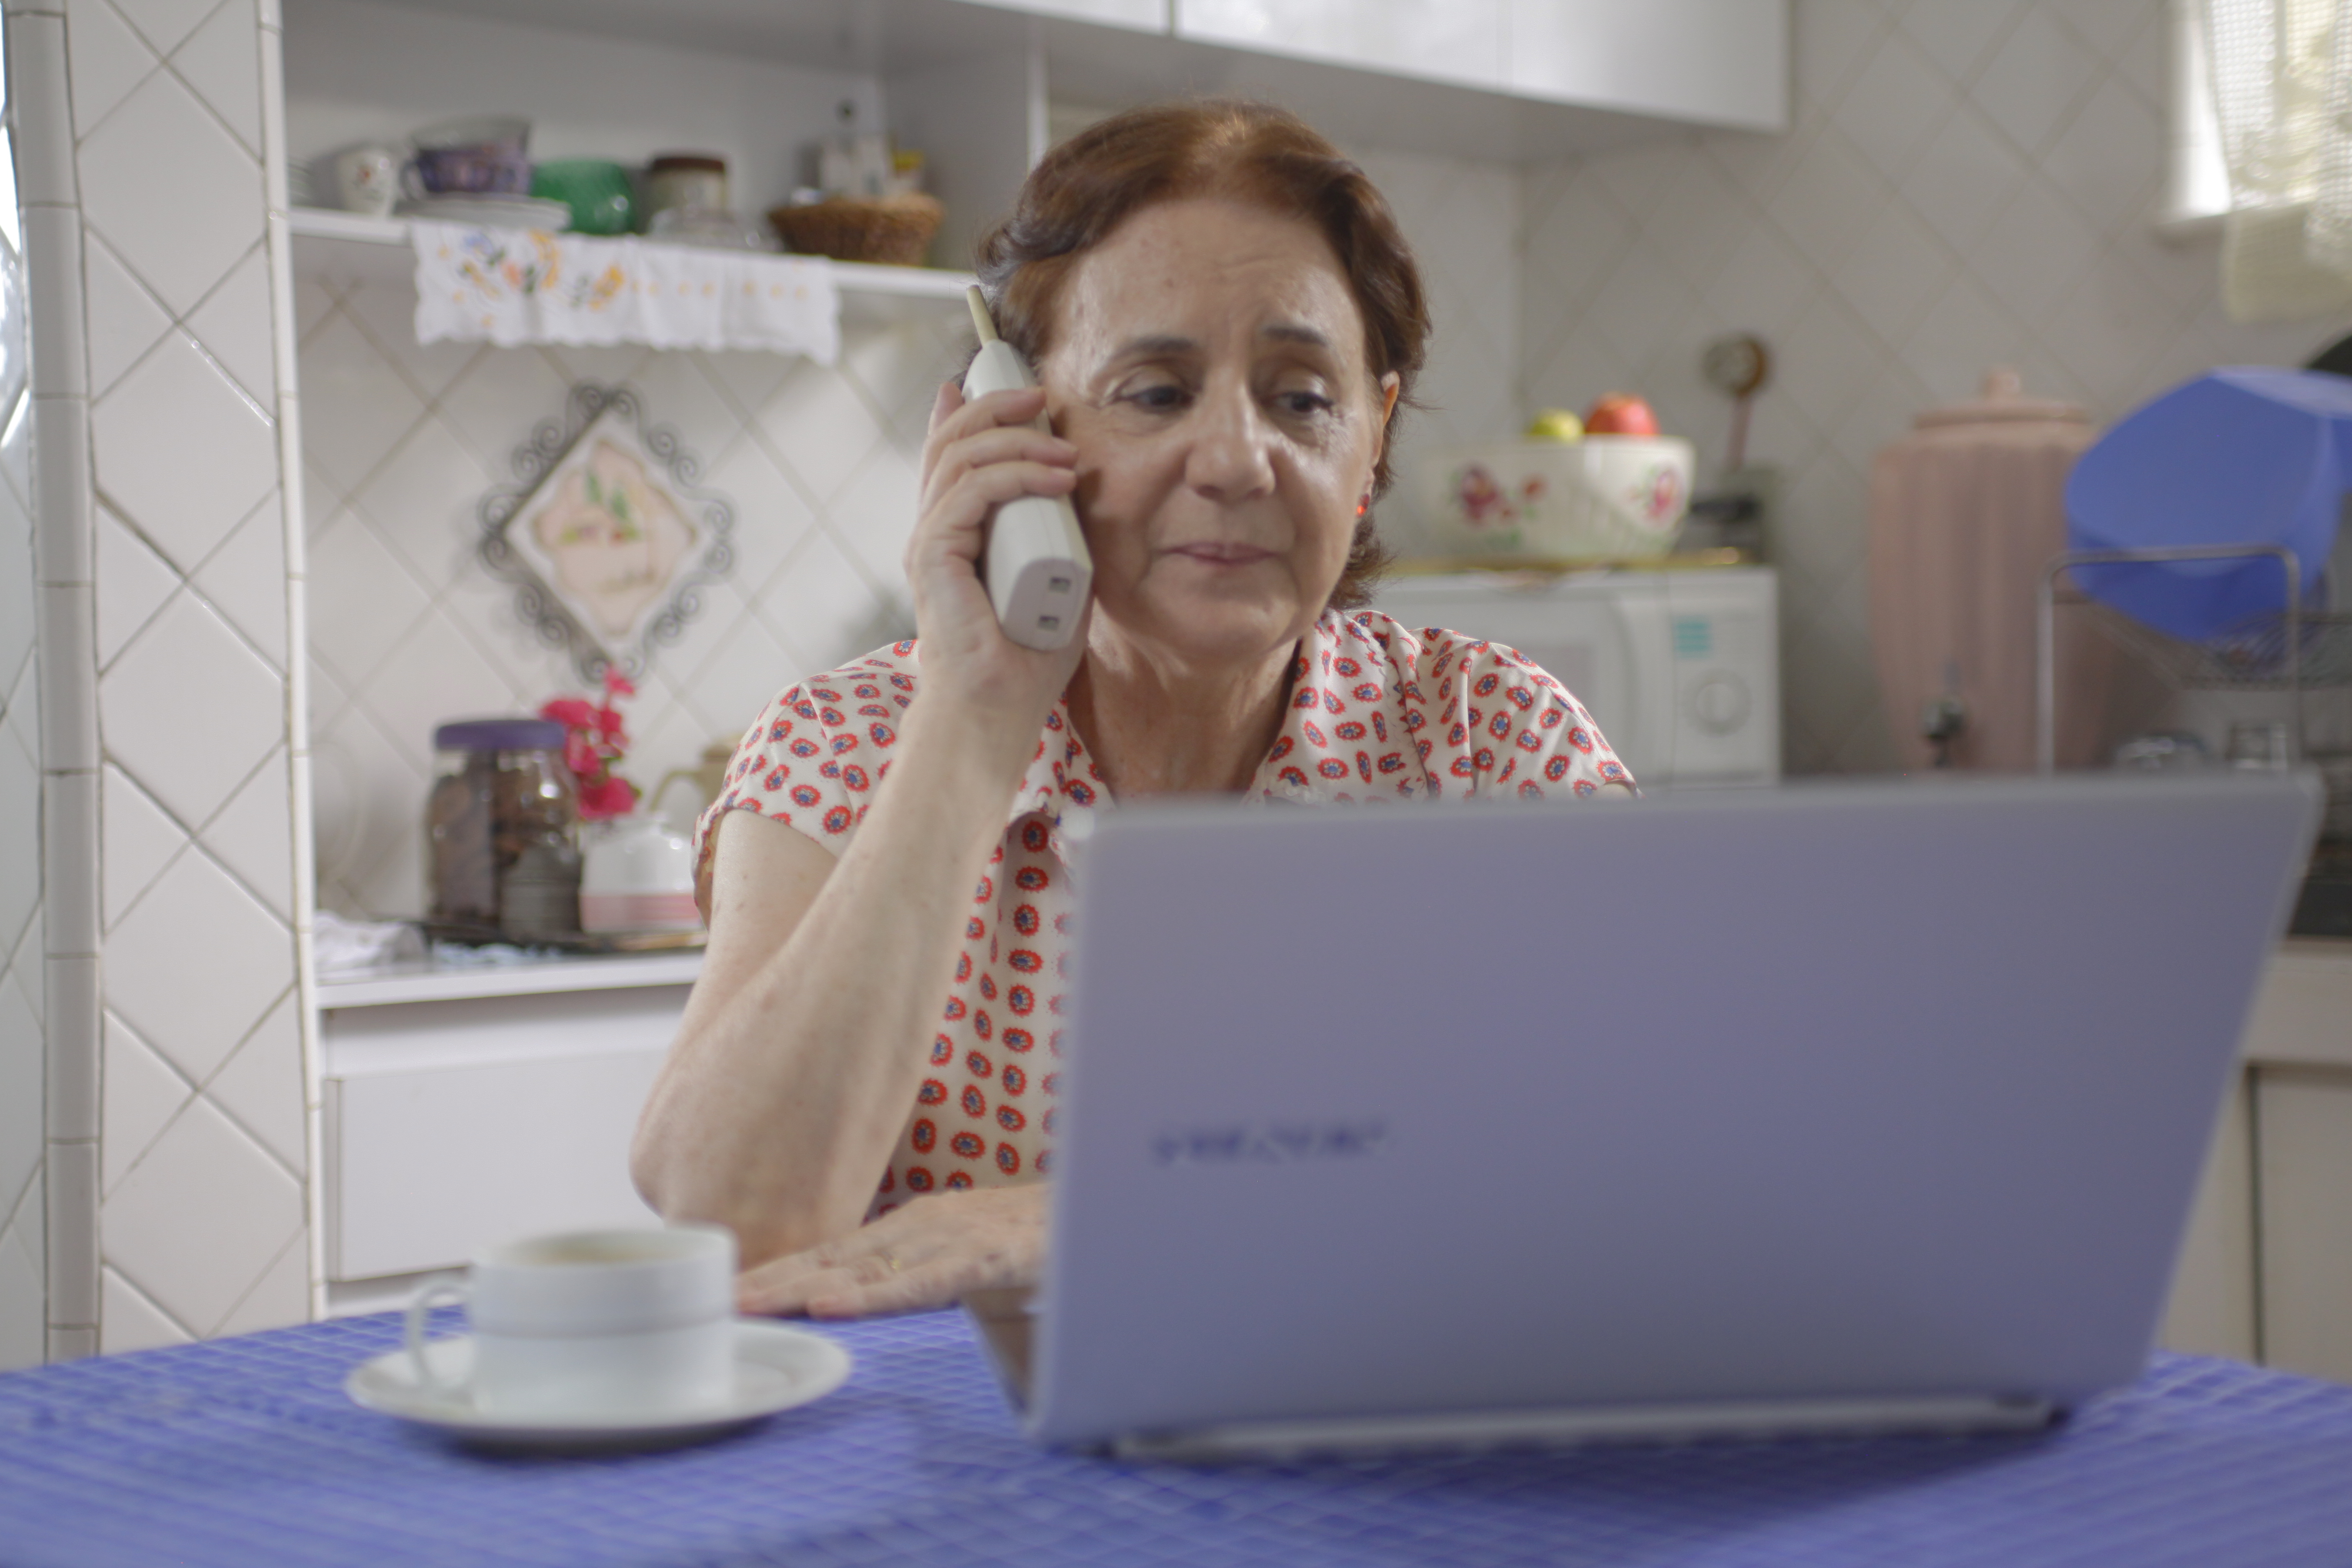 Mulher fala ao telefone e olha o computador